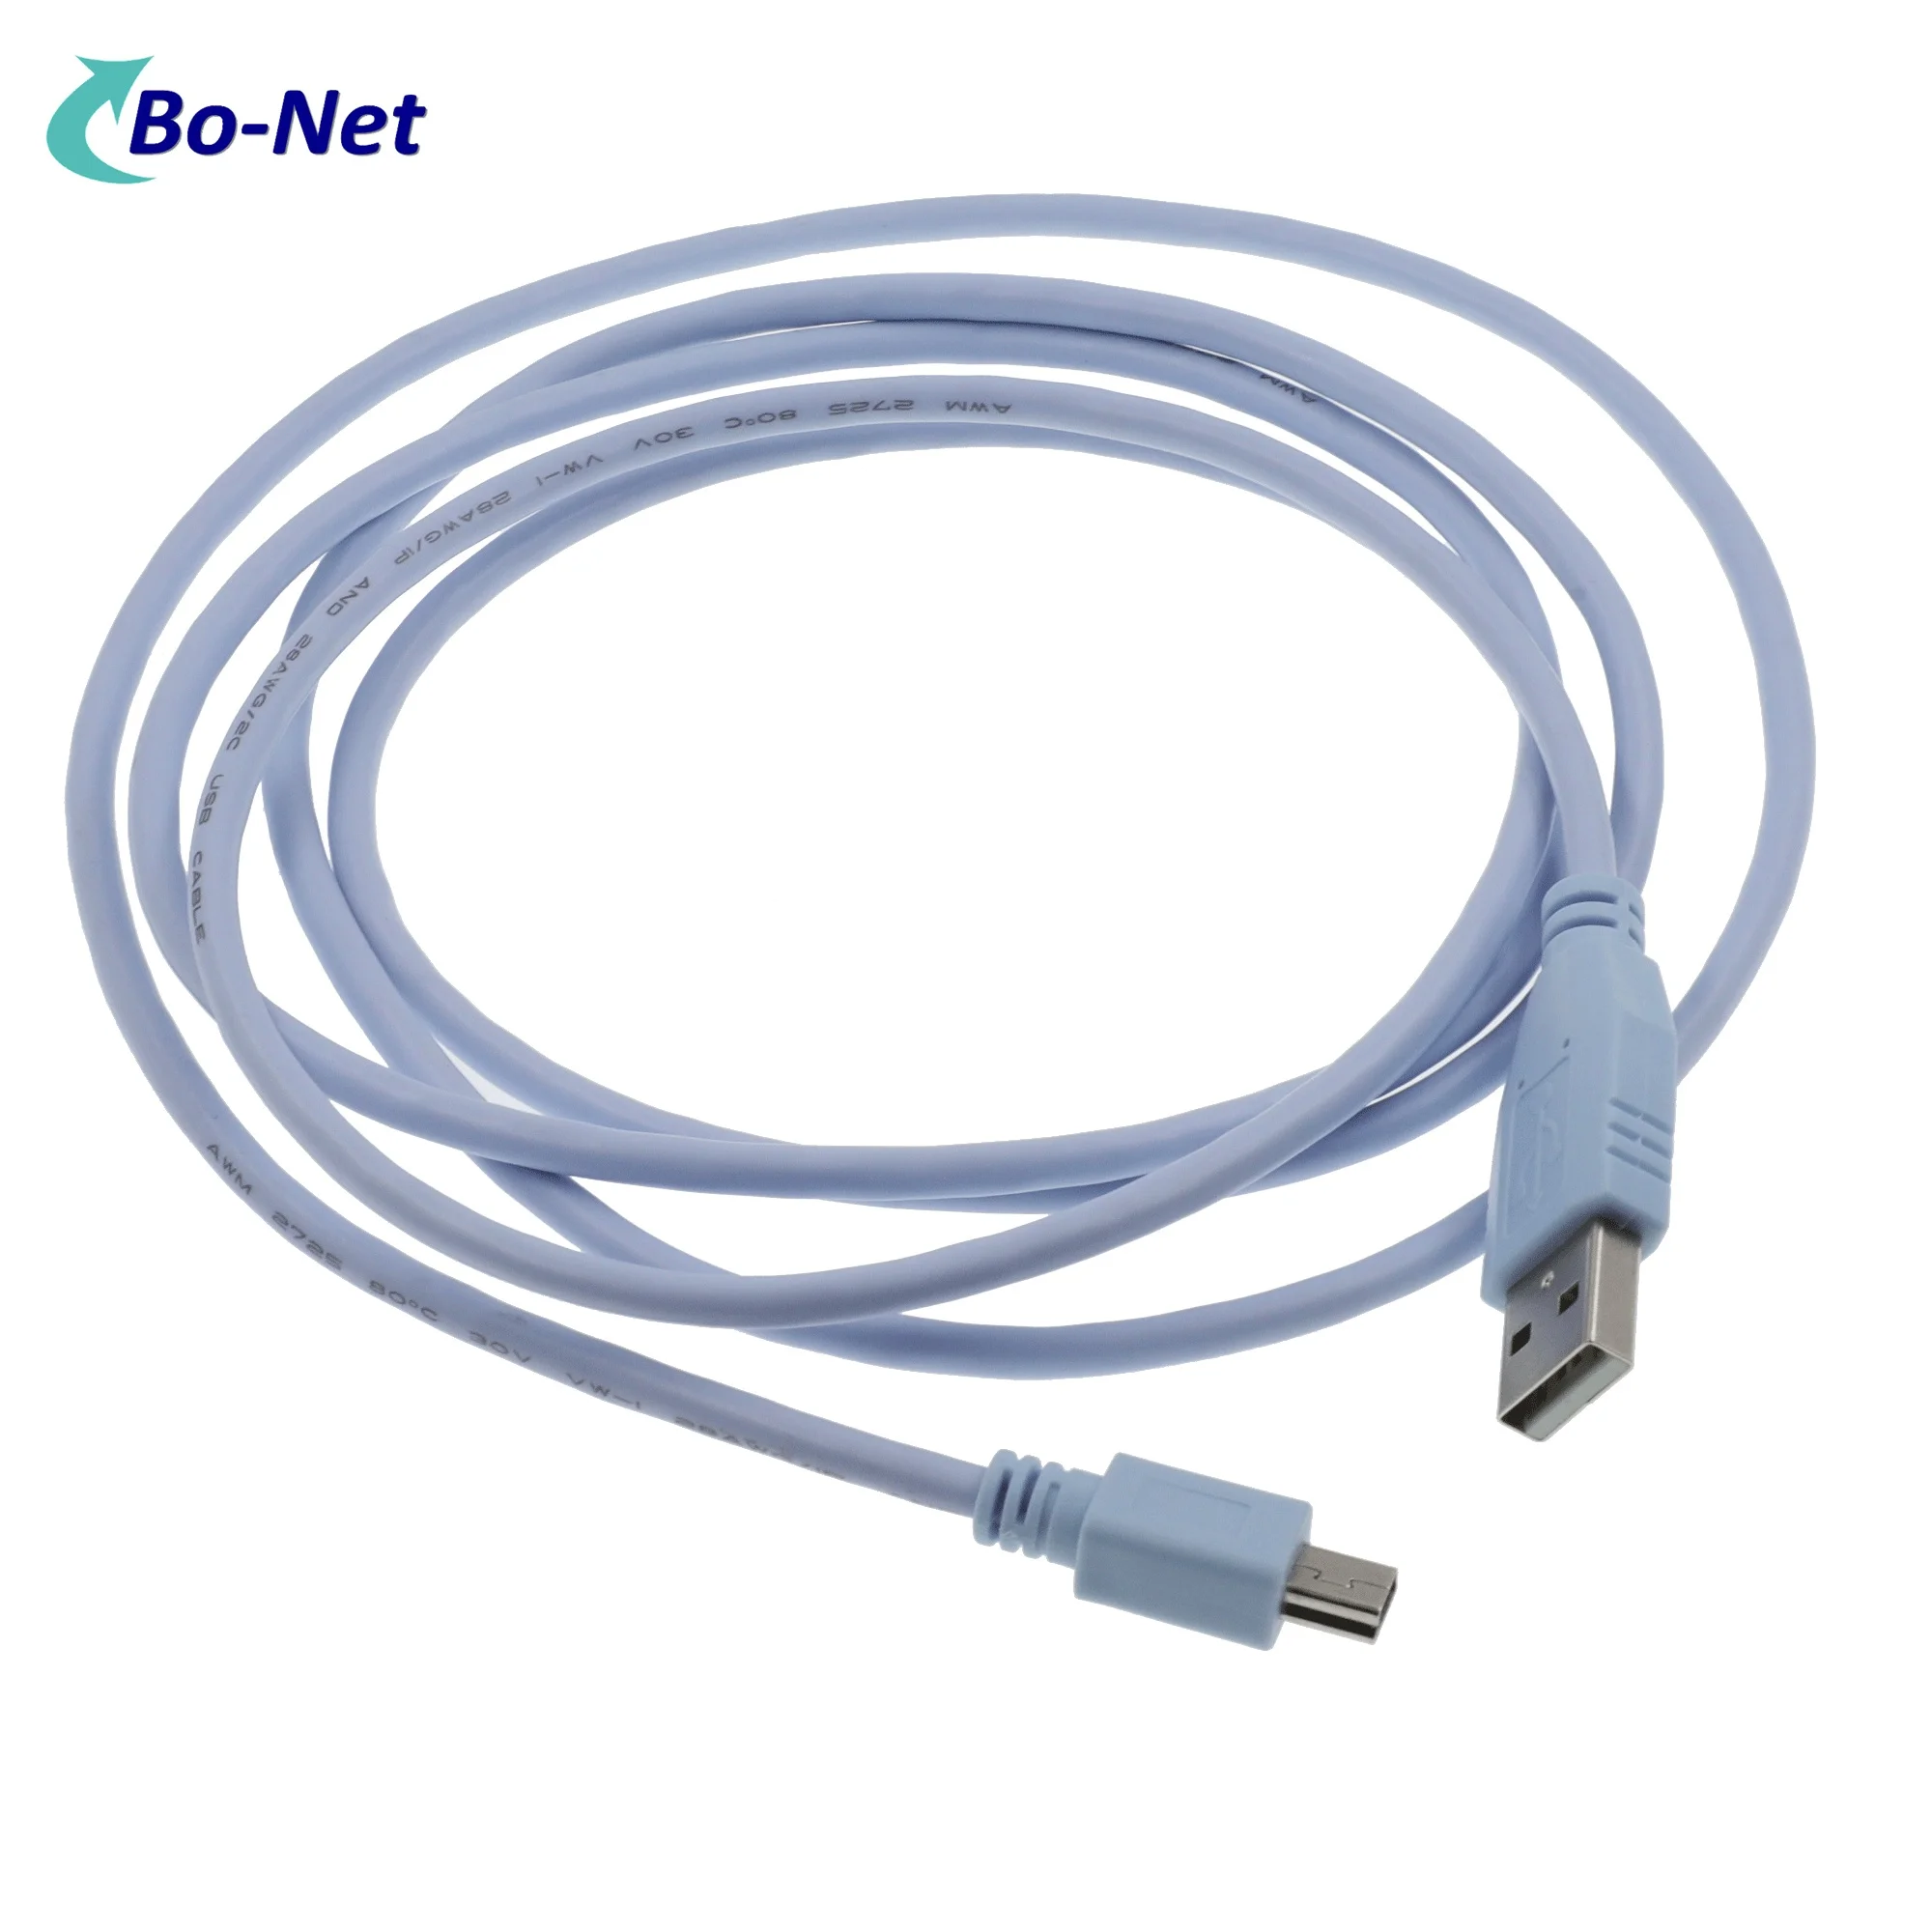 CIS CO CAB-CONSOLE-USB USB Console Cable USB to mini-USB for Configure CIS CO 9200L 9300 3850 Switches